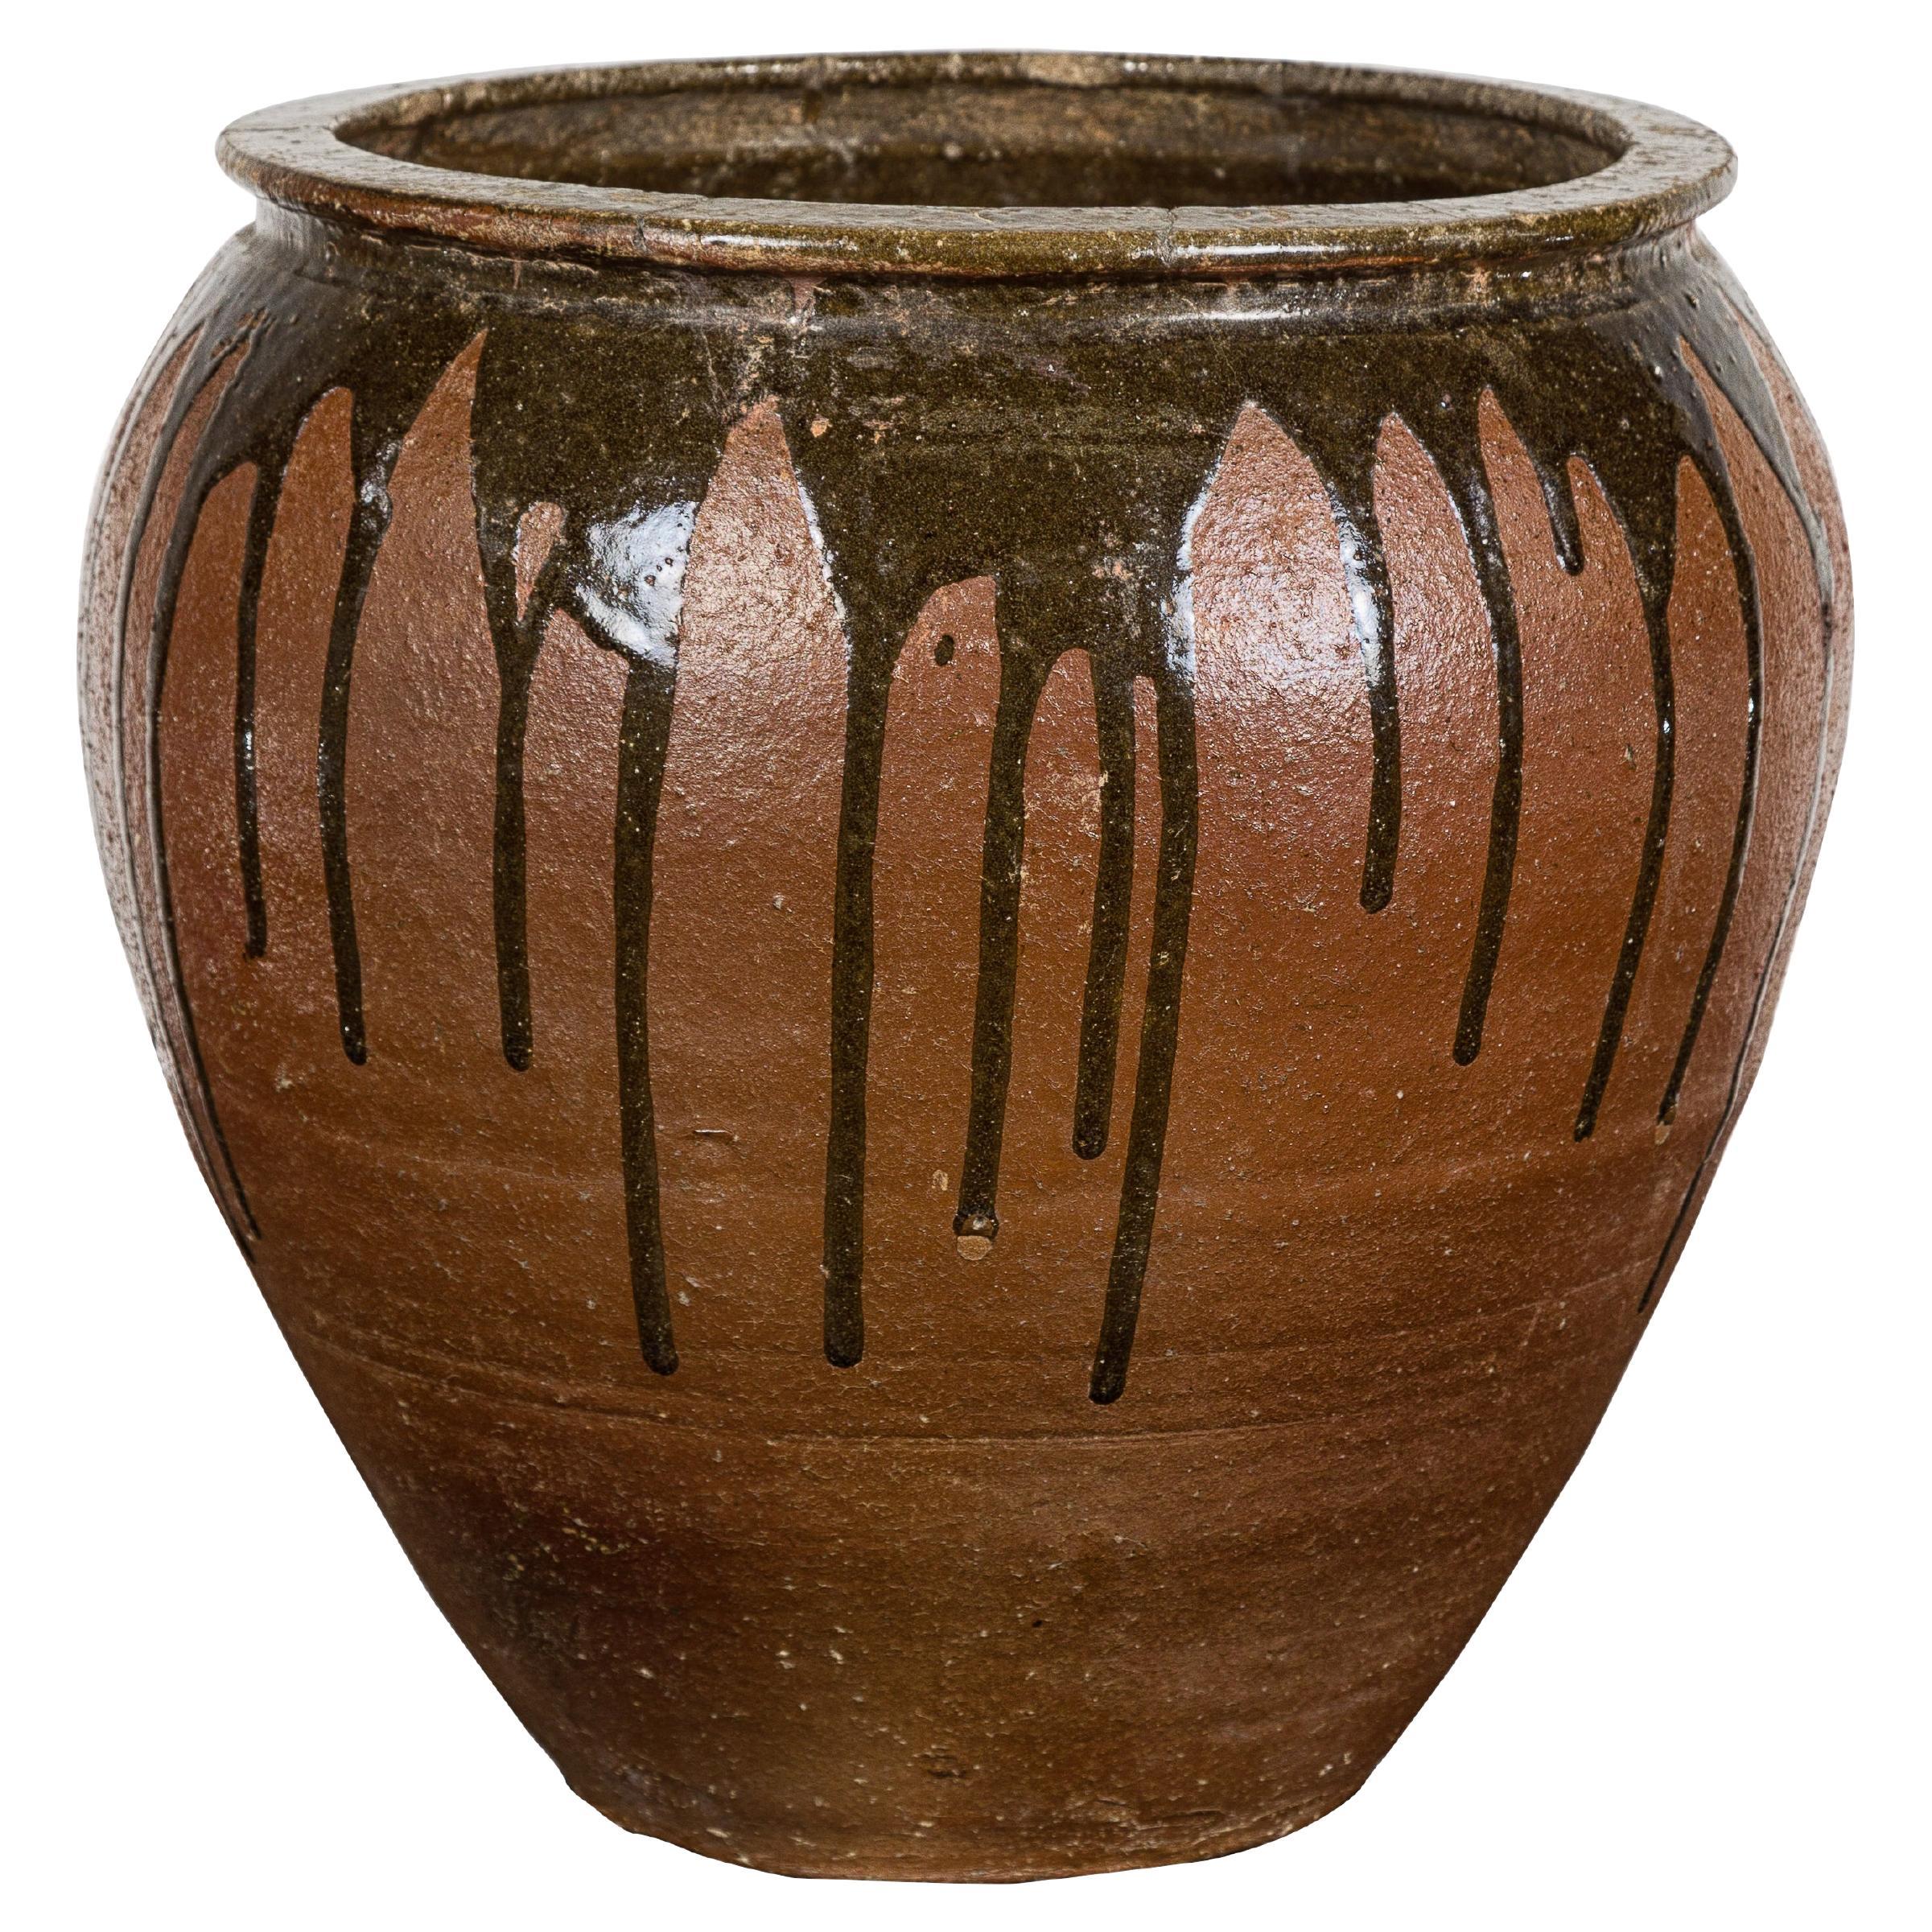 Japanese Tamba Ware Brown Glazed Ceramic Salt Pot Planter with Dripping